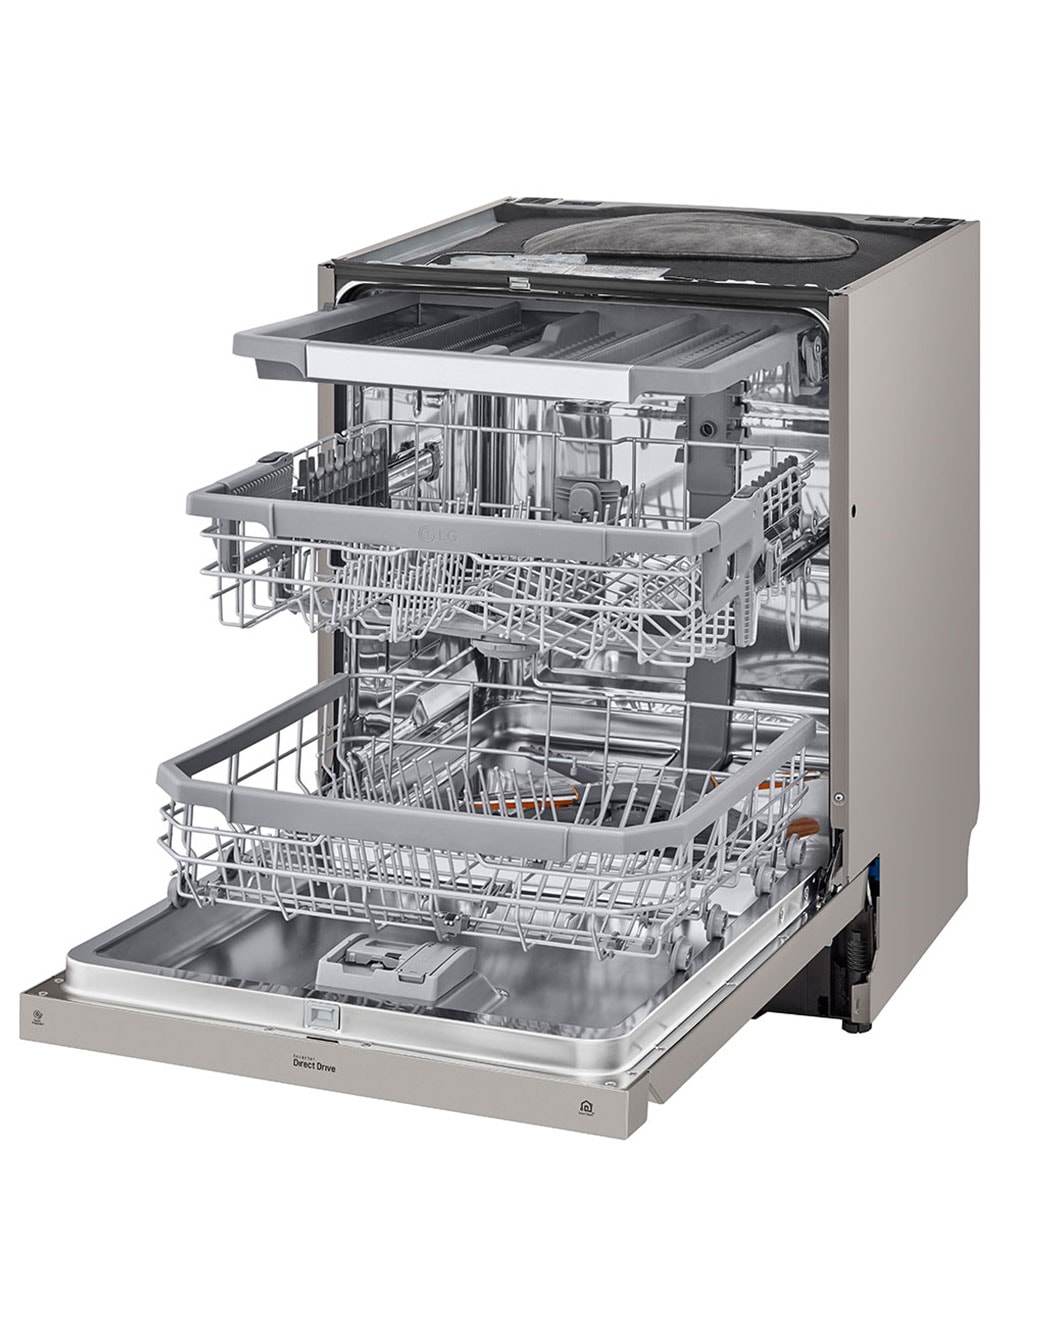 Compact Countertop Dishwashers : portable countertop dishwasher